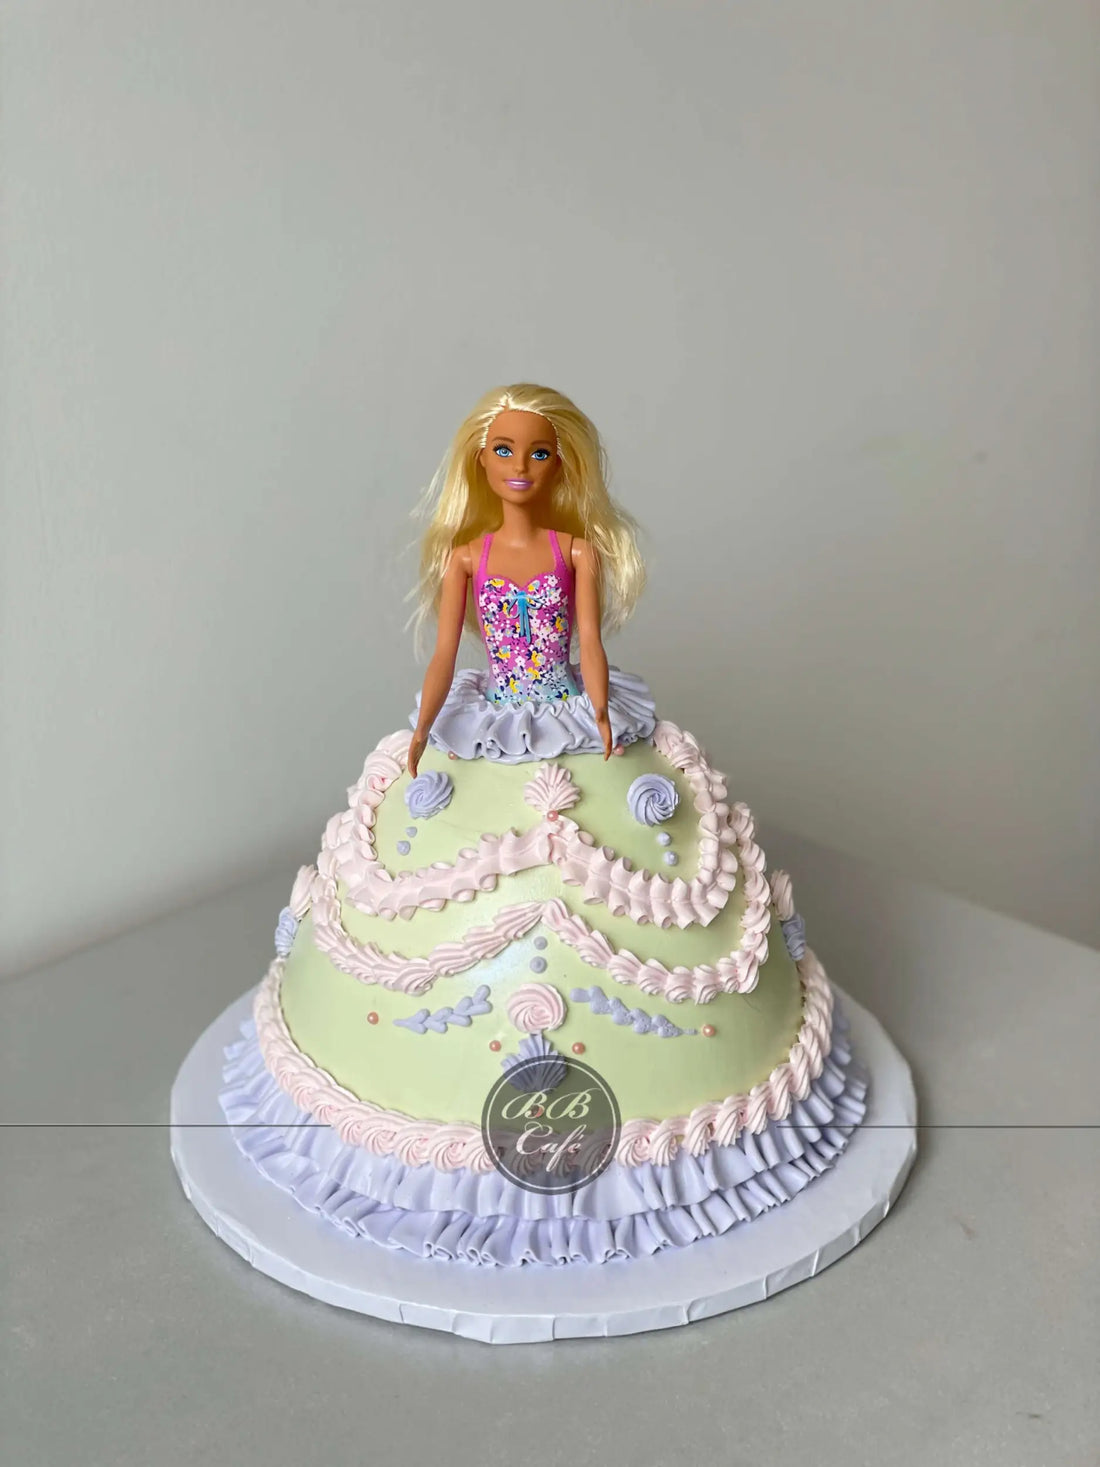 Barbie doll lambeth dress in whipped cream - custom cake